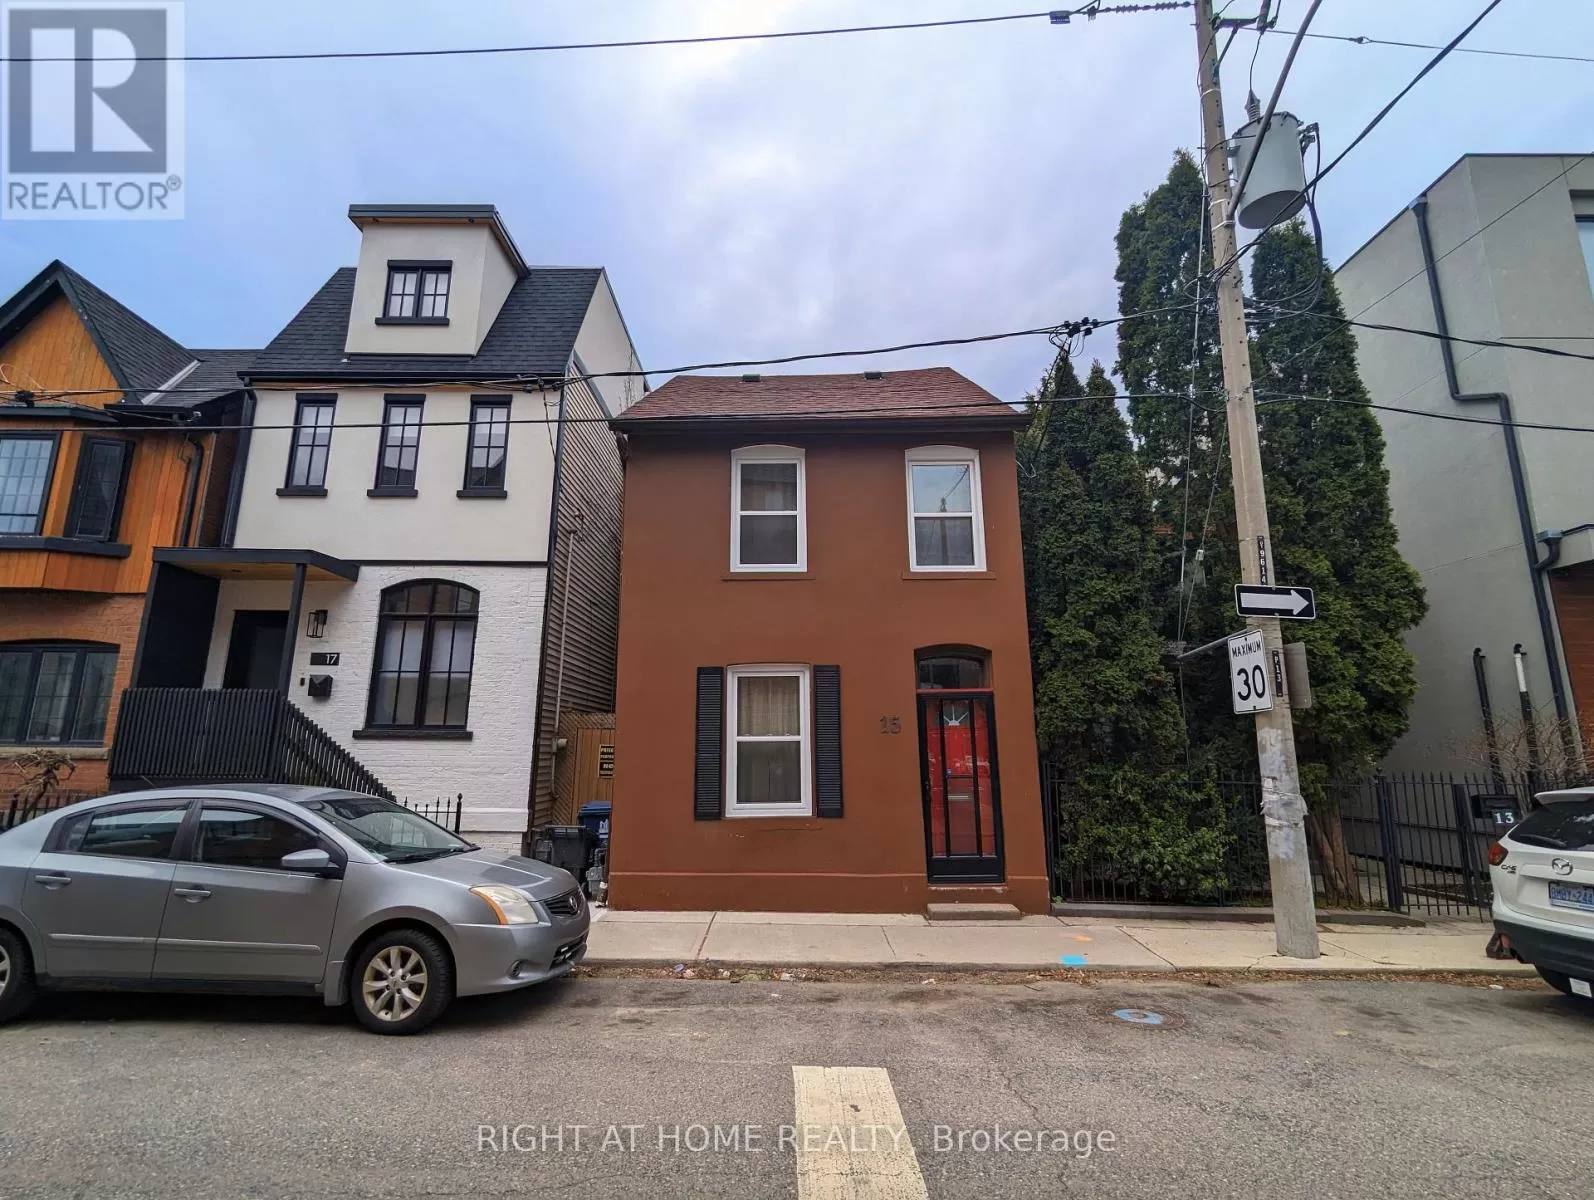 House for rent: 15 Kintyre Avenue, Toronto, Ontario M4M 1M2